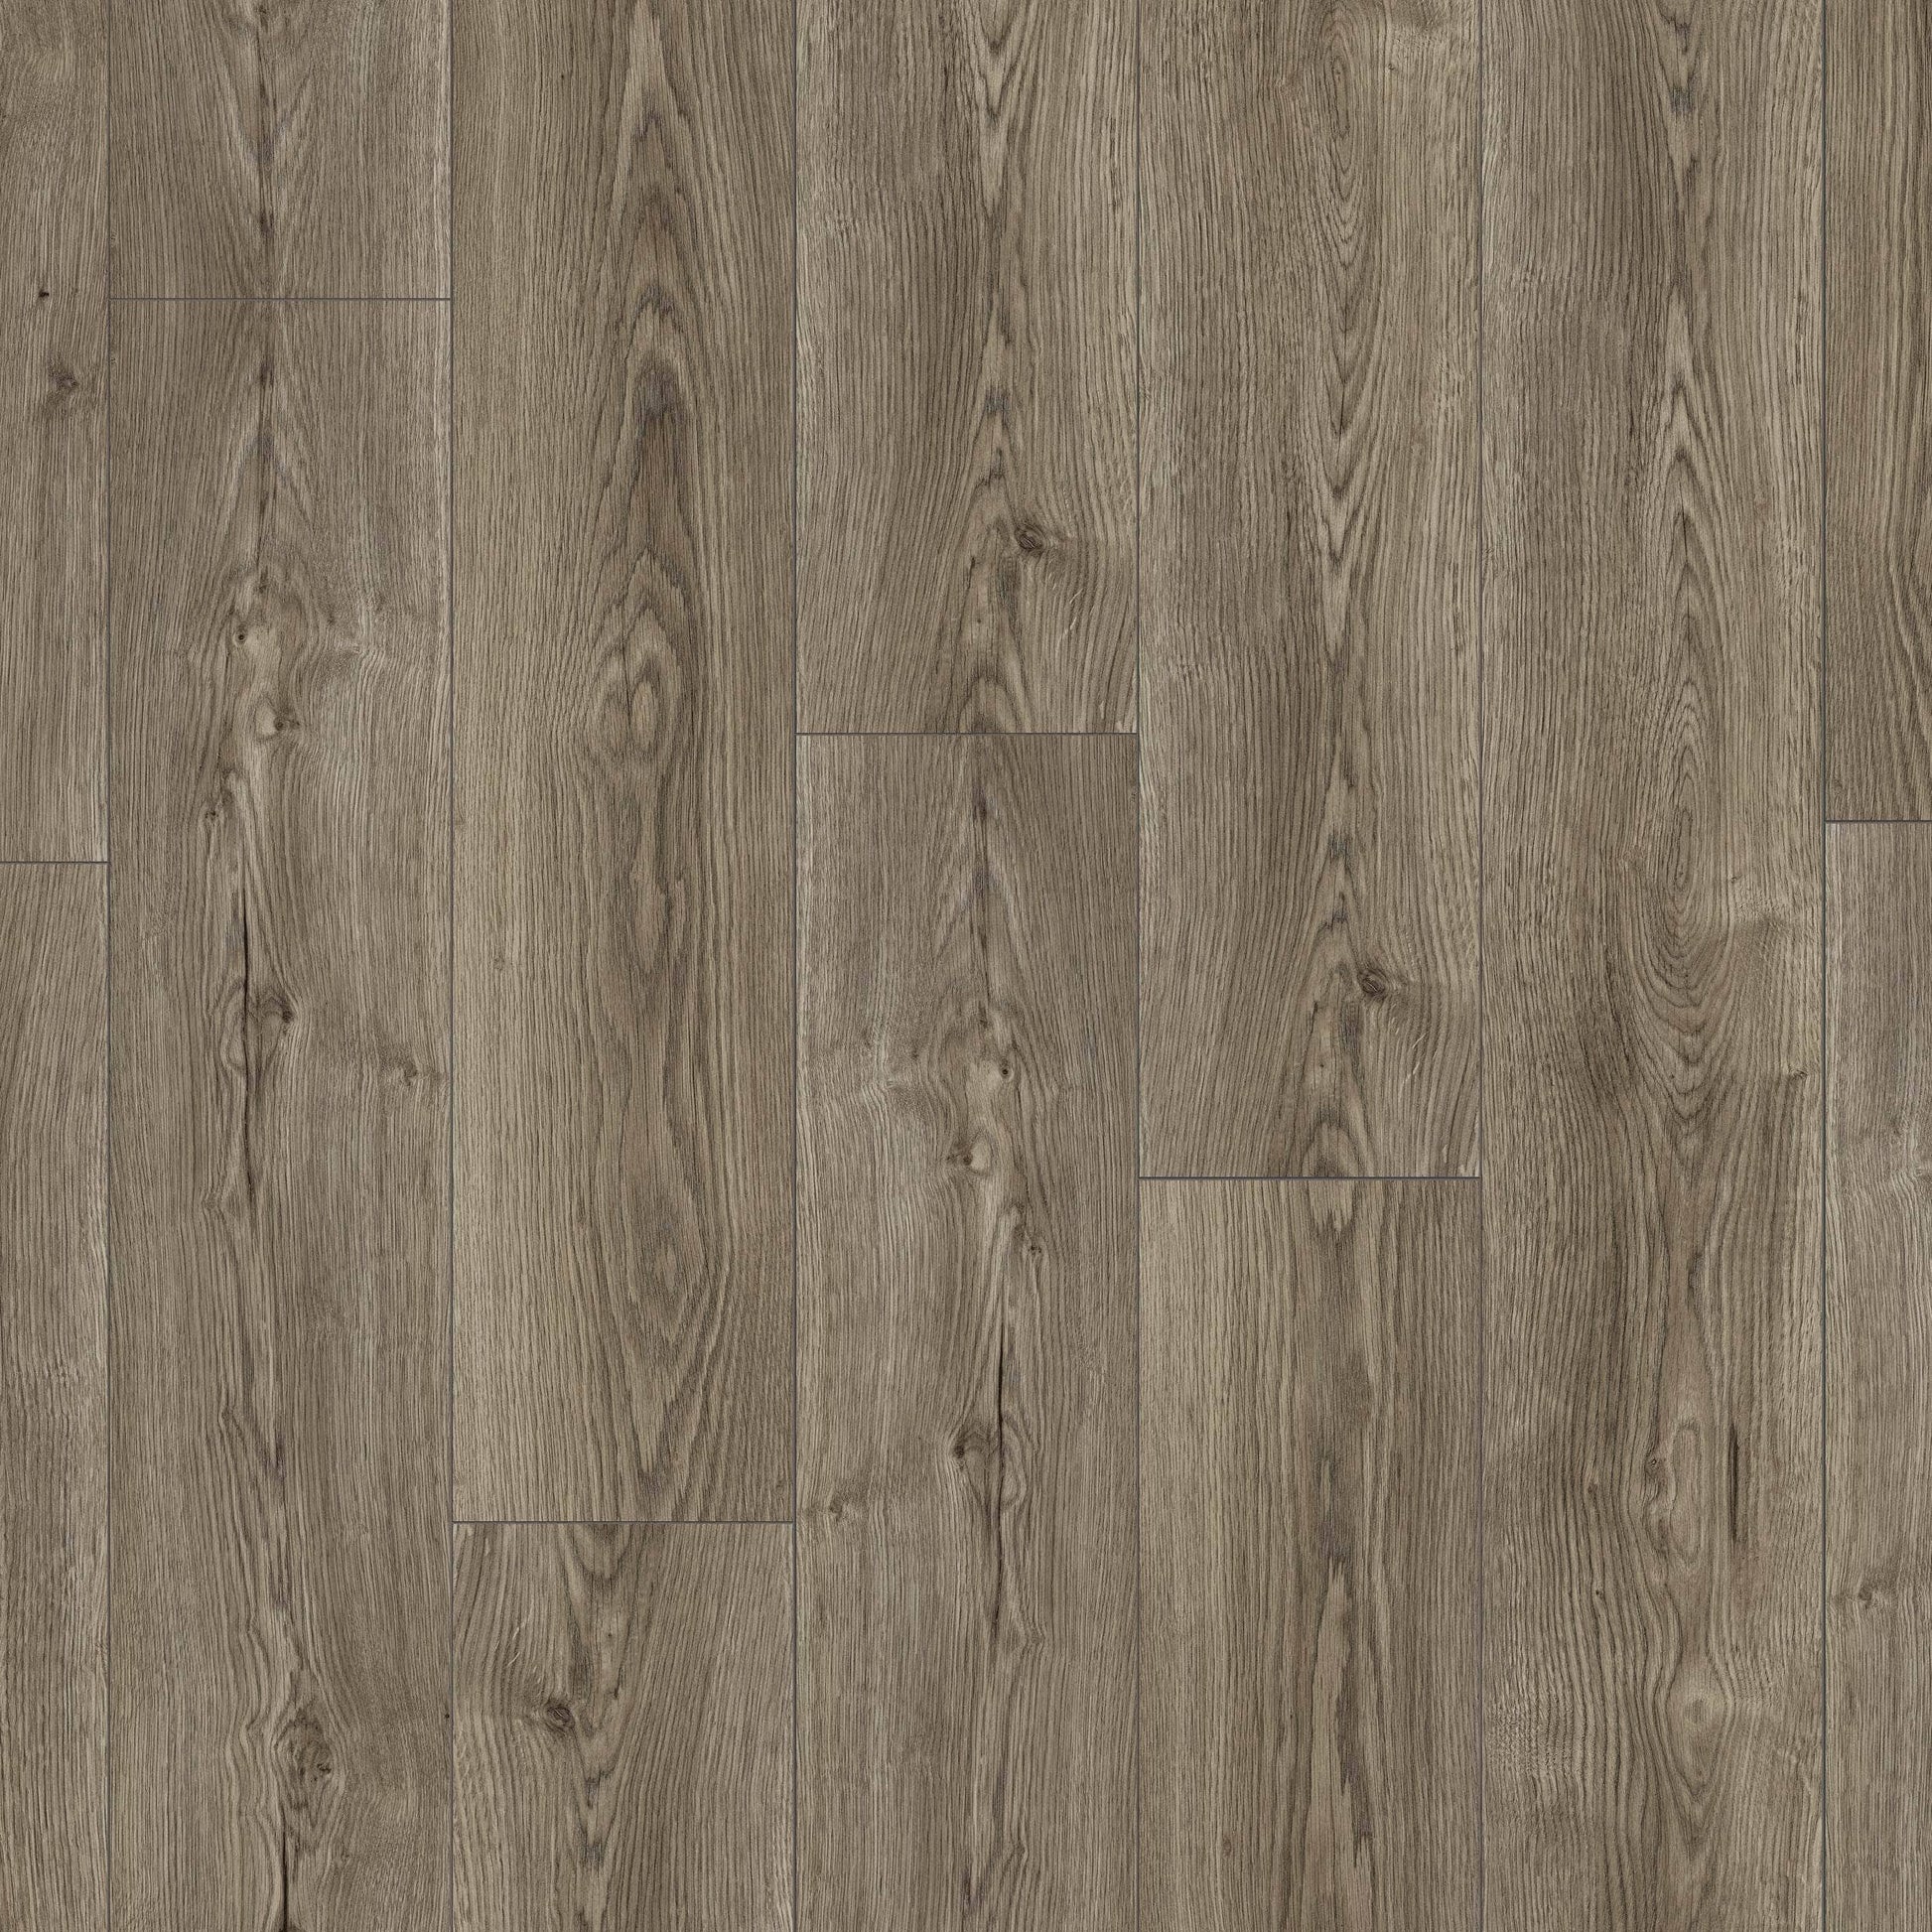 Flooring & Carpet  -  Krono Supernatural Twilight Sterling Oak 8mm Laminate Flooring (2.22m² Pack)  -  60007168